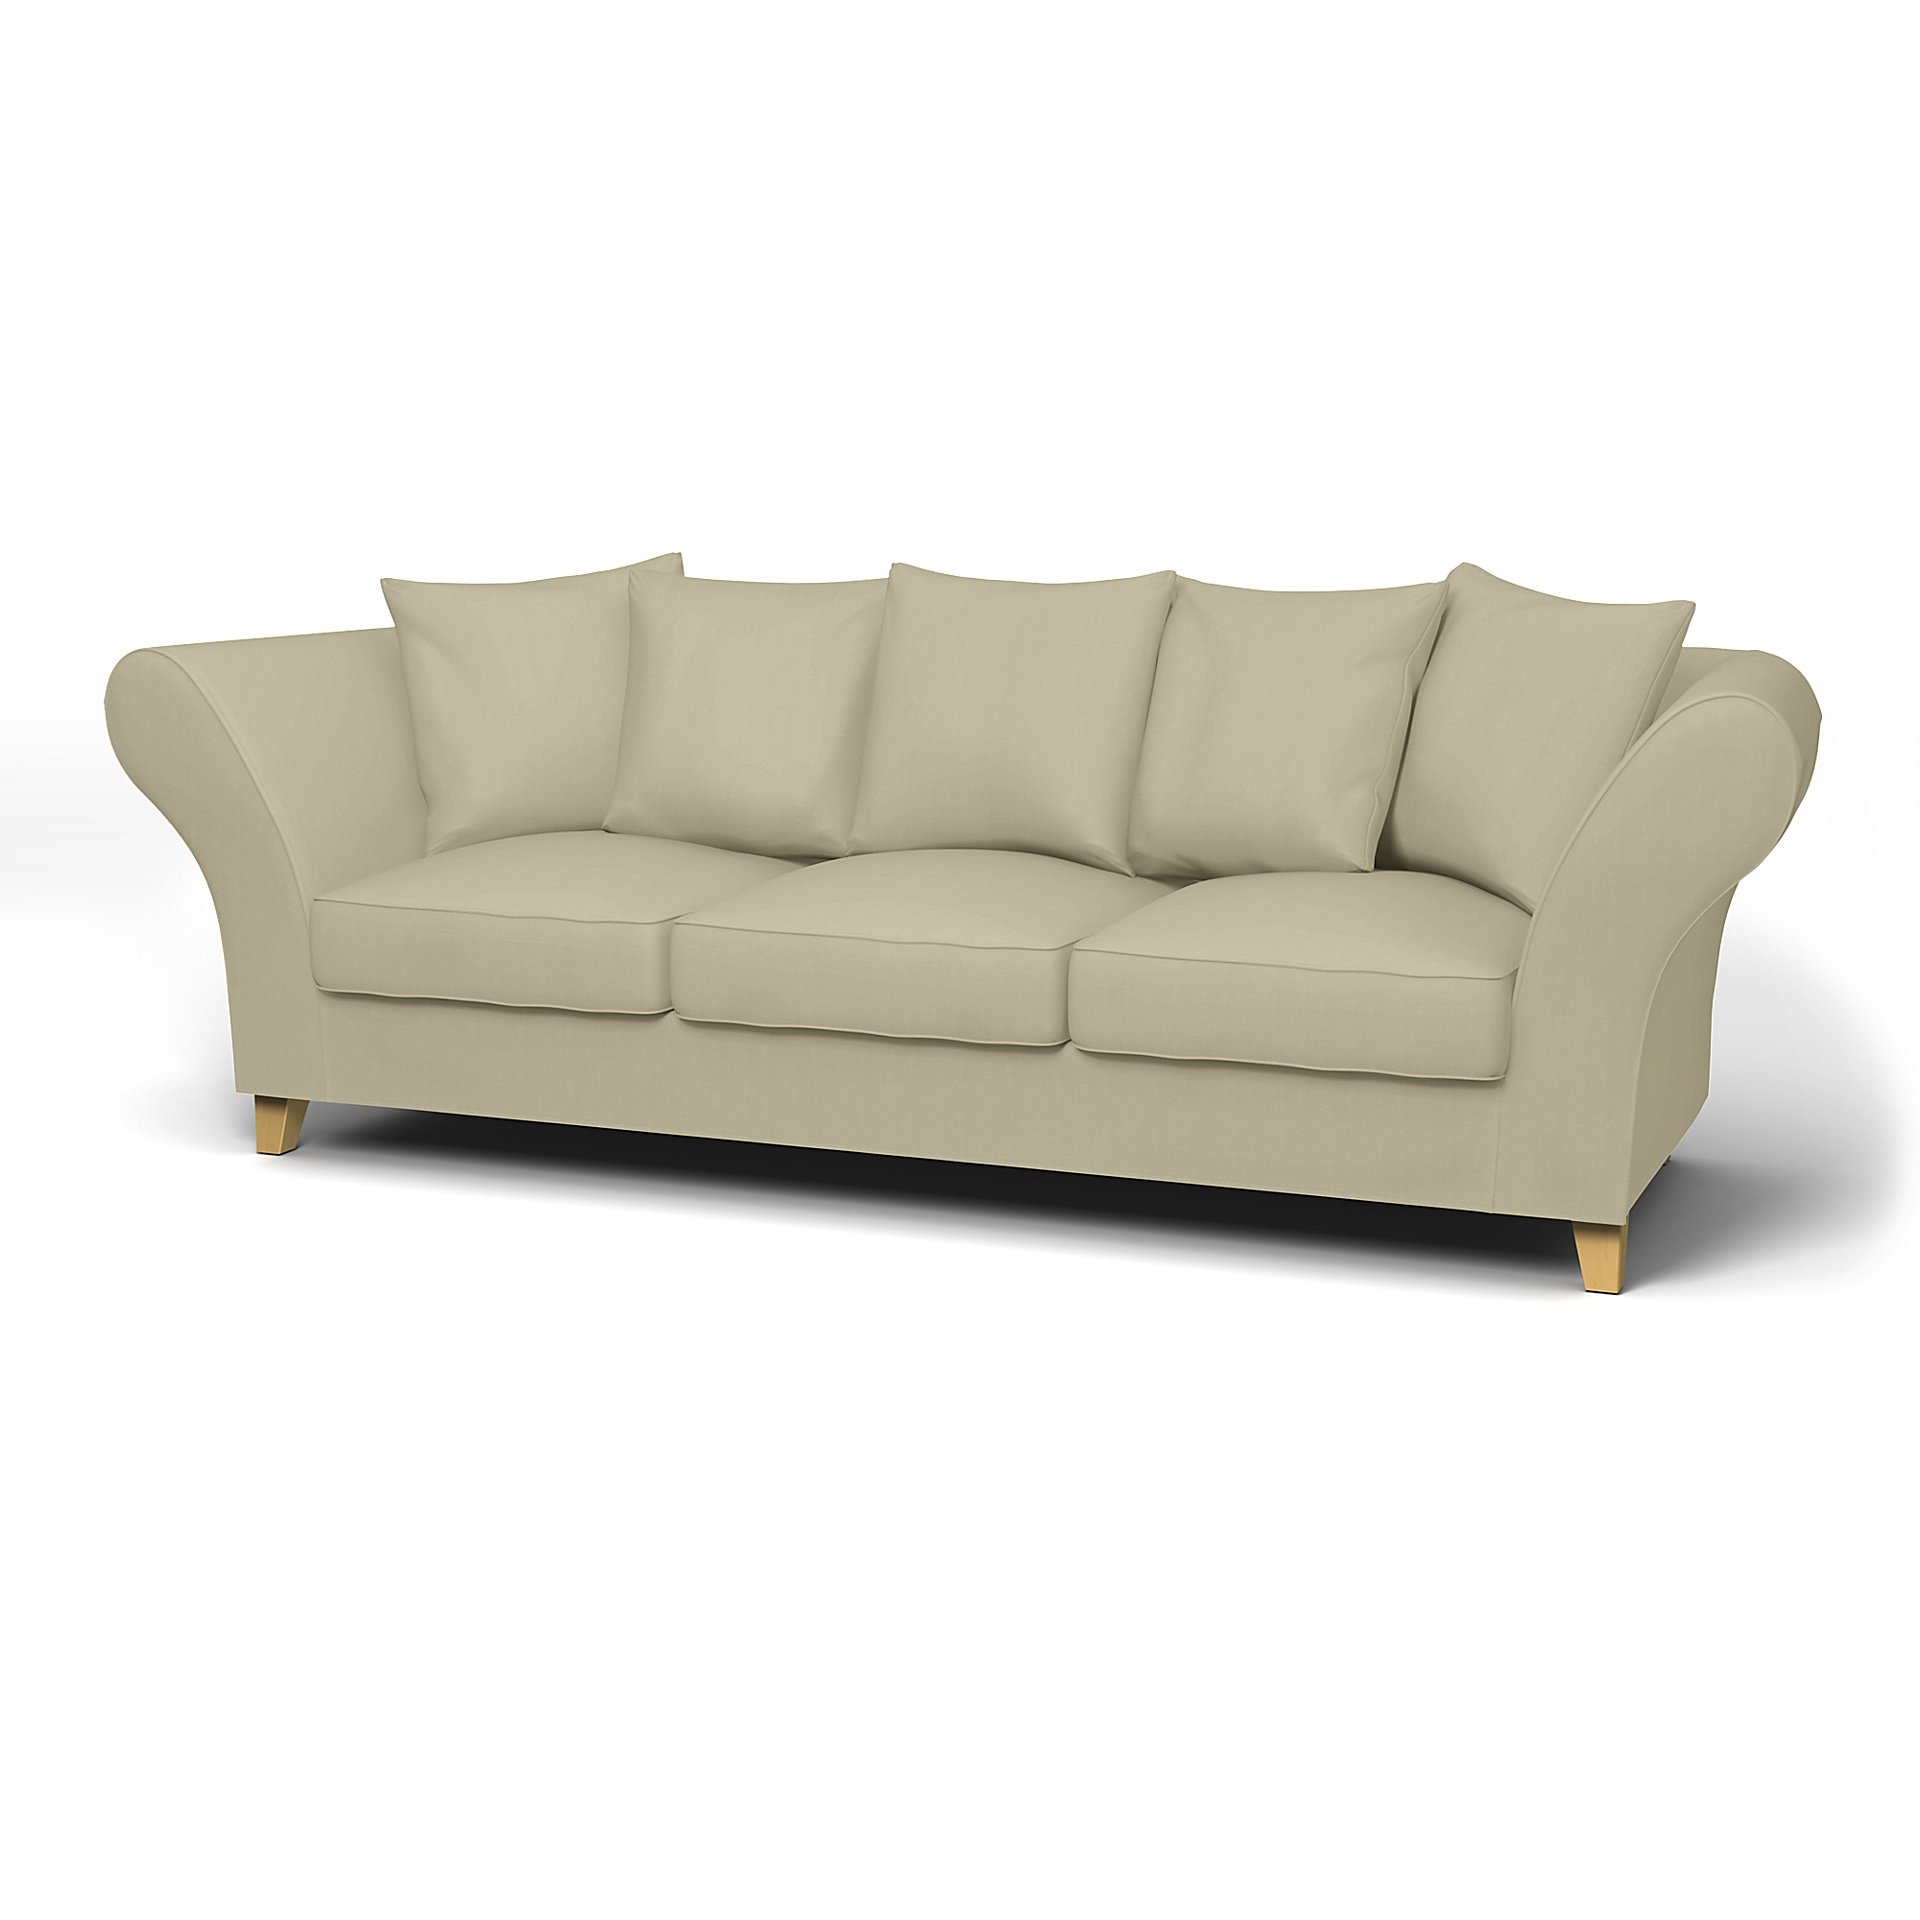 IKEA - Backa 3.5 Seater Sofa Cover, Sand Beige, Cotton - Bemz